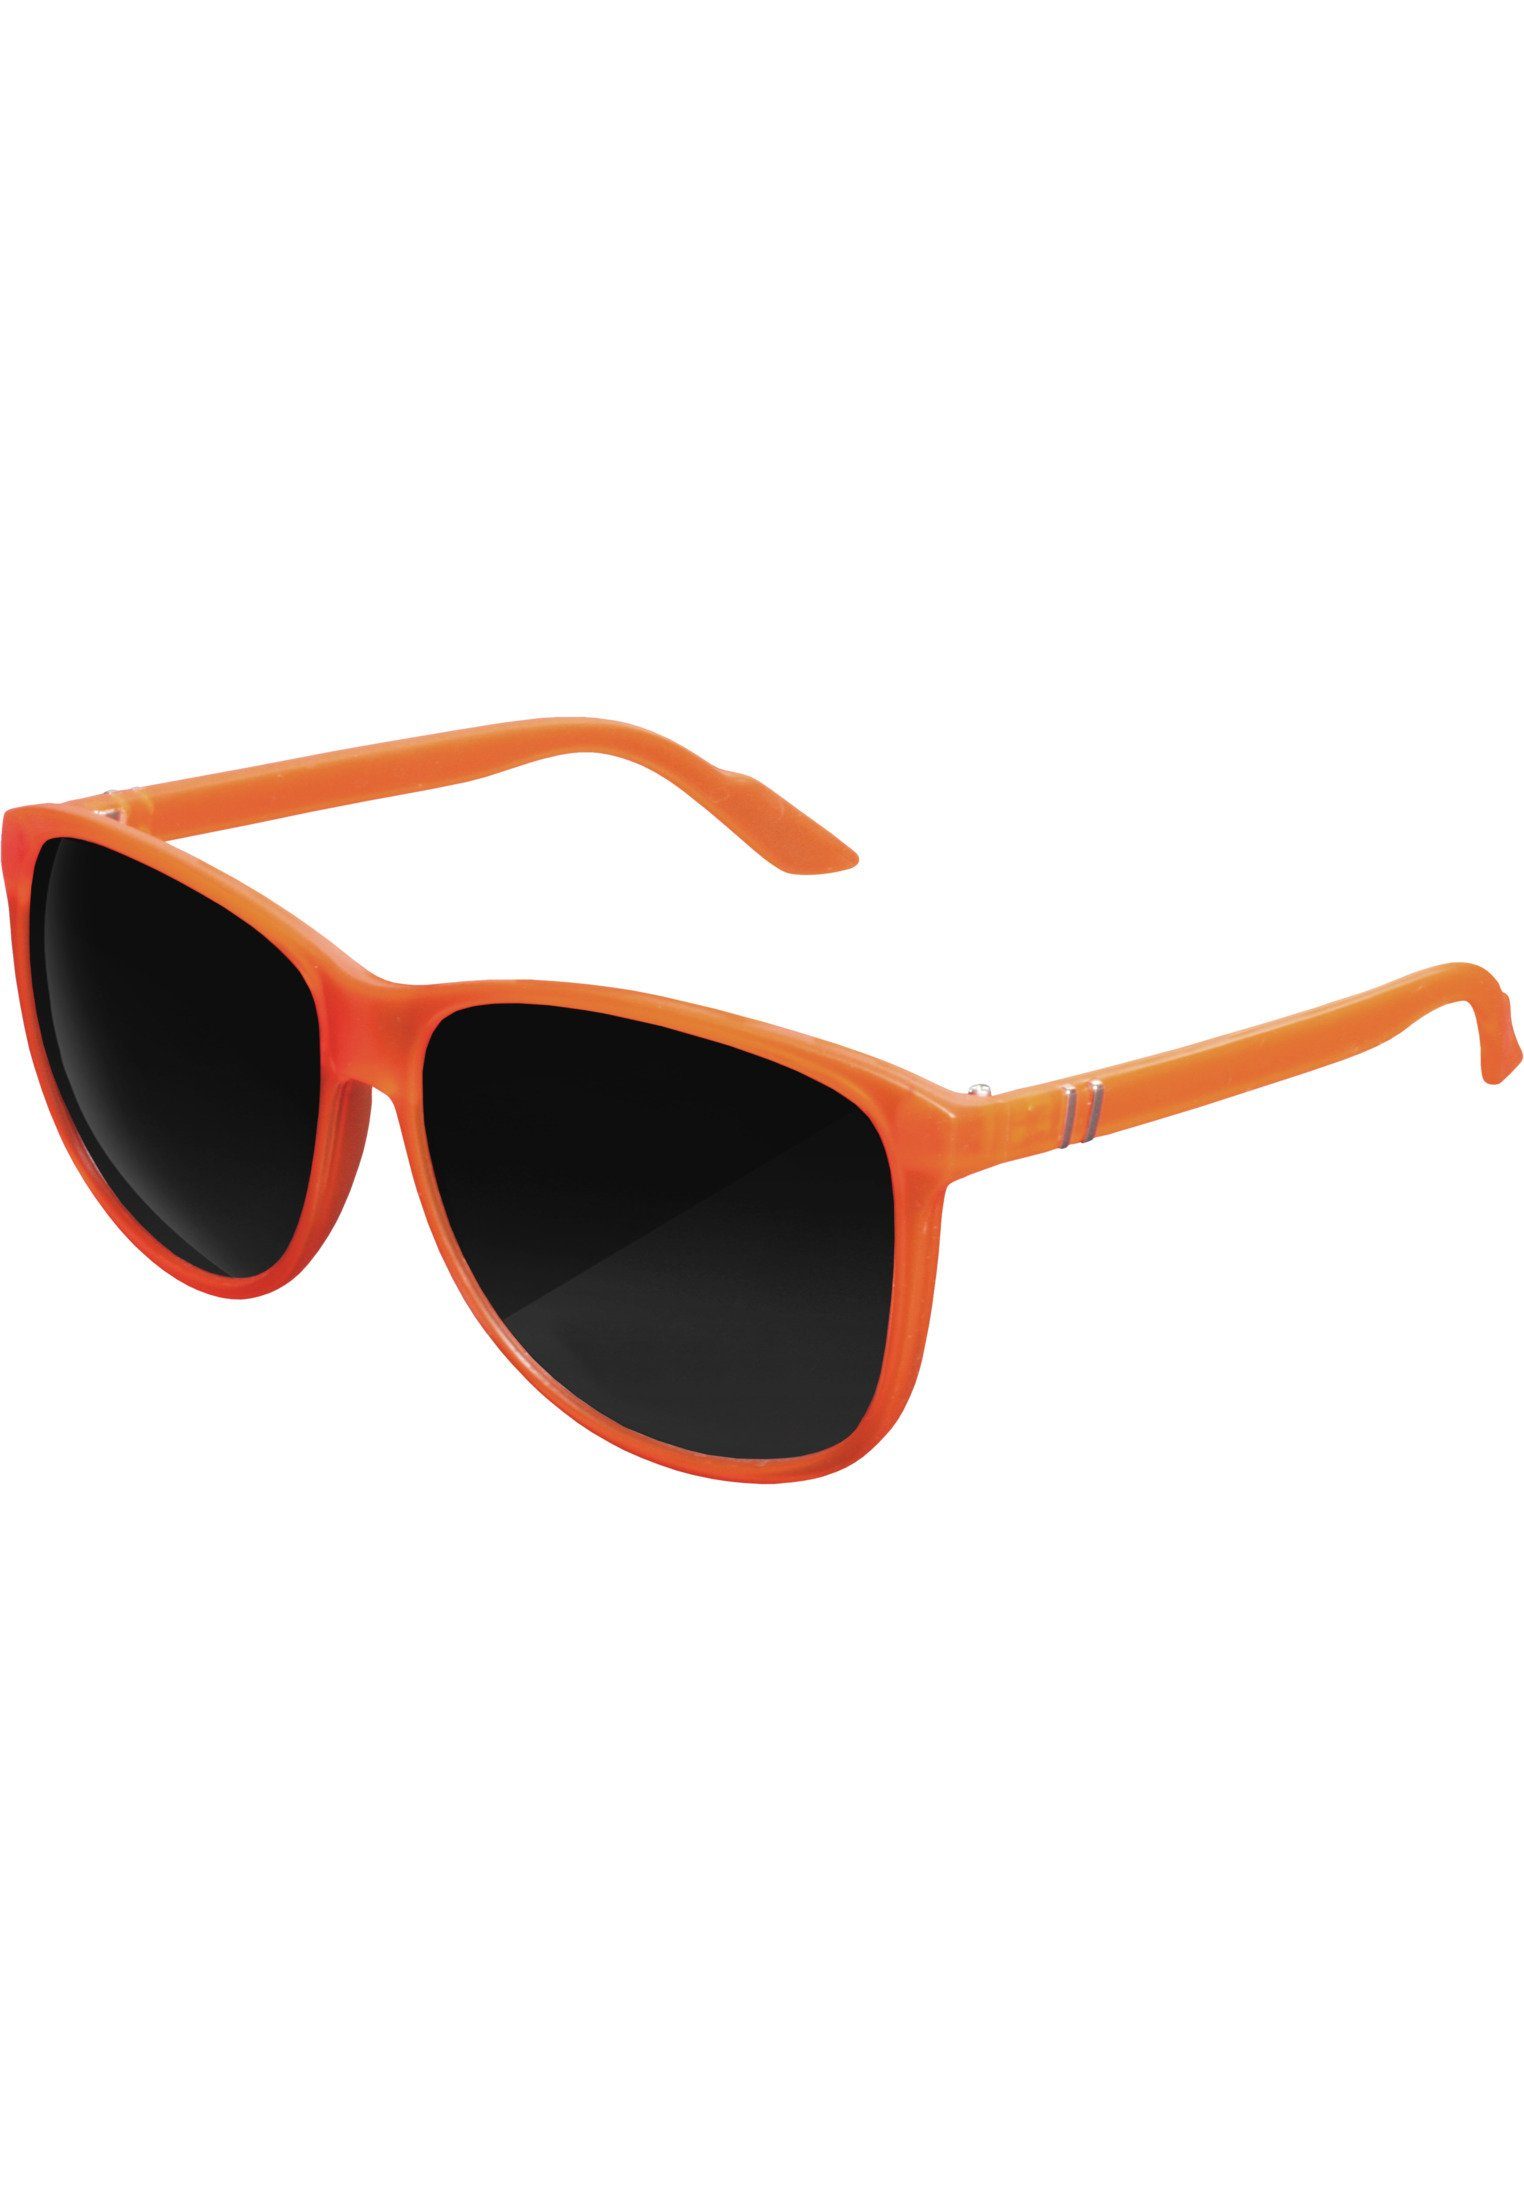 MSTRDS Sonnenbrille Accessoires Sunglasses Chirwa neonorange